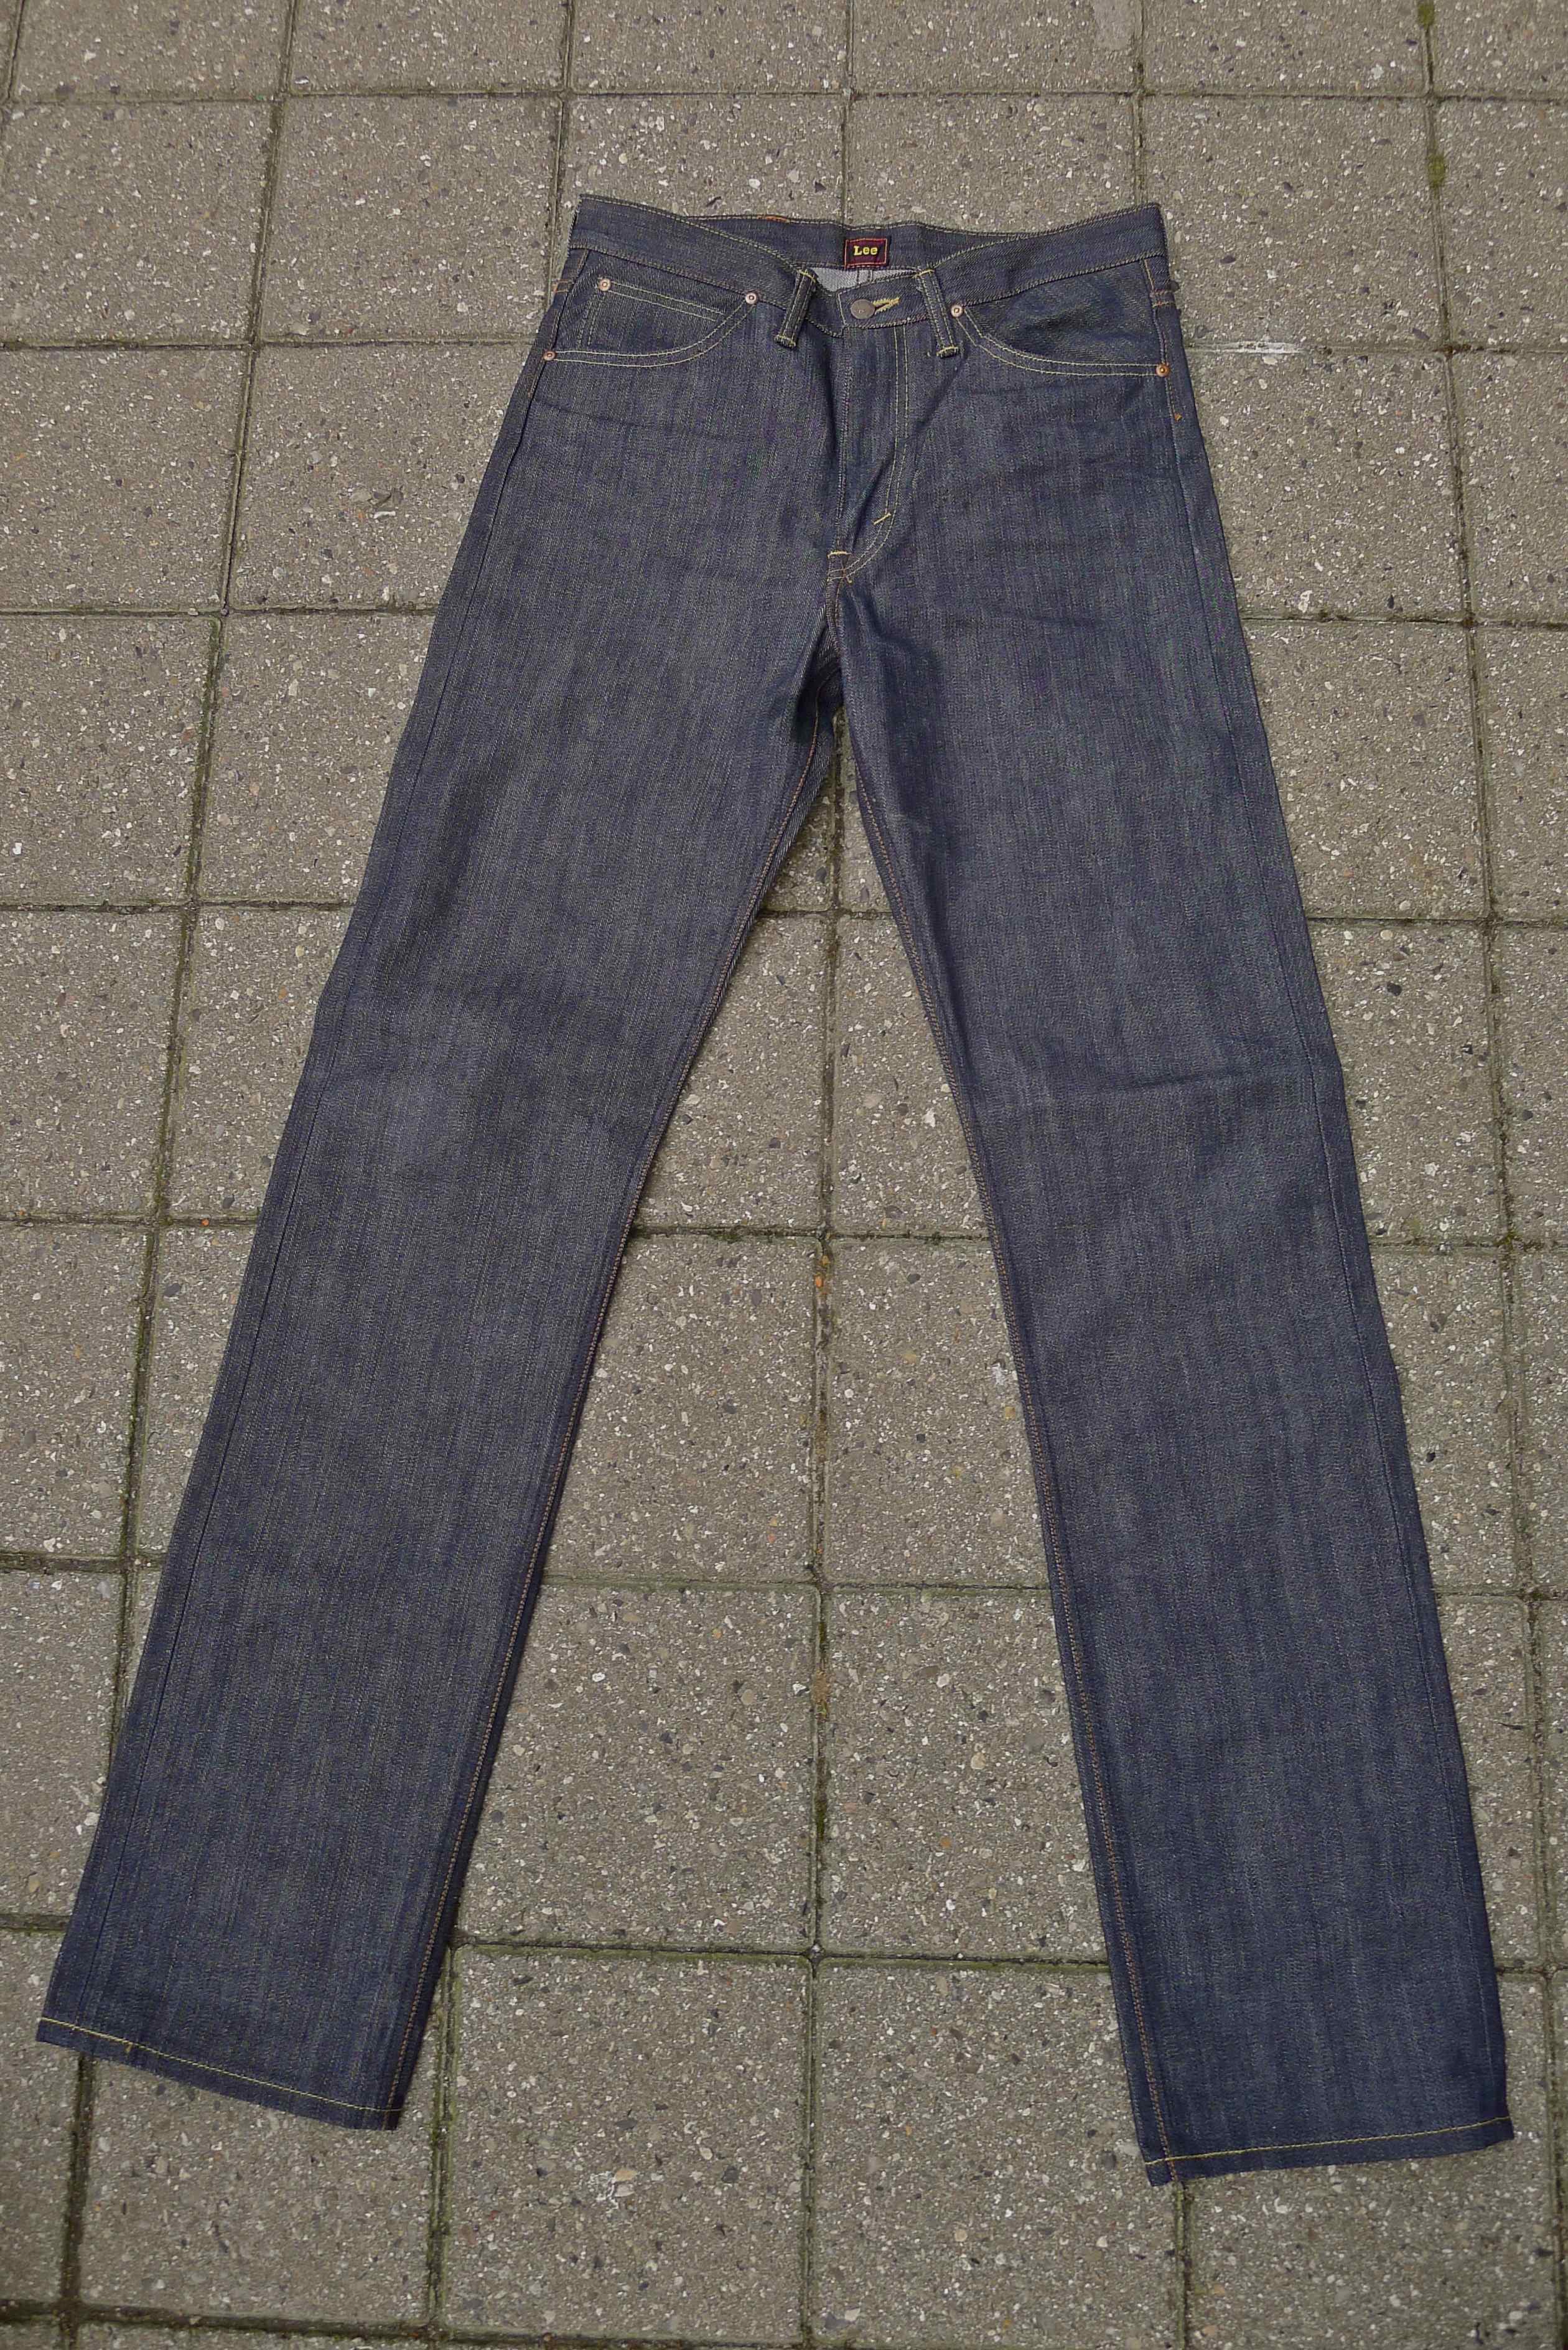 james dean lee jeans